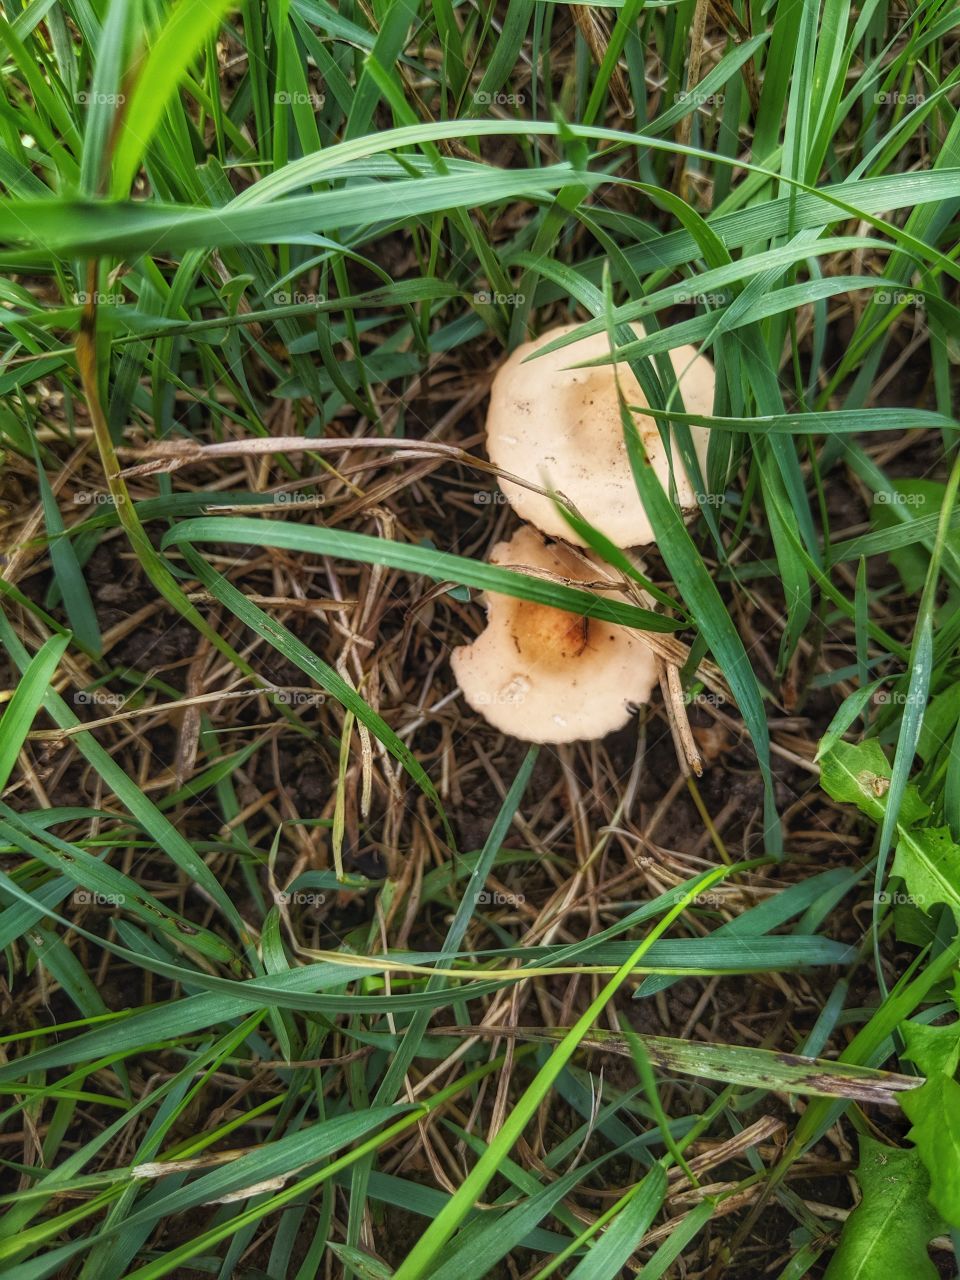 mushrooms in the backyard.